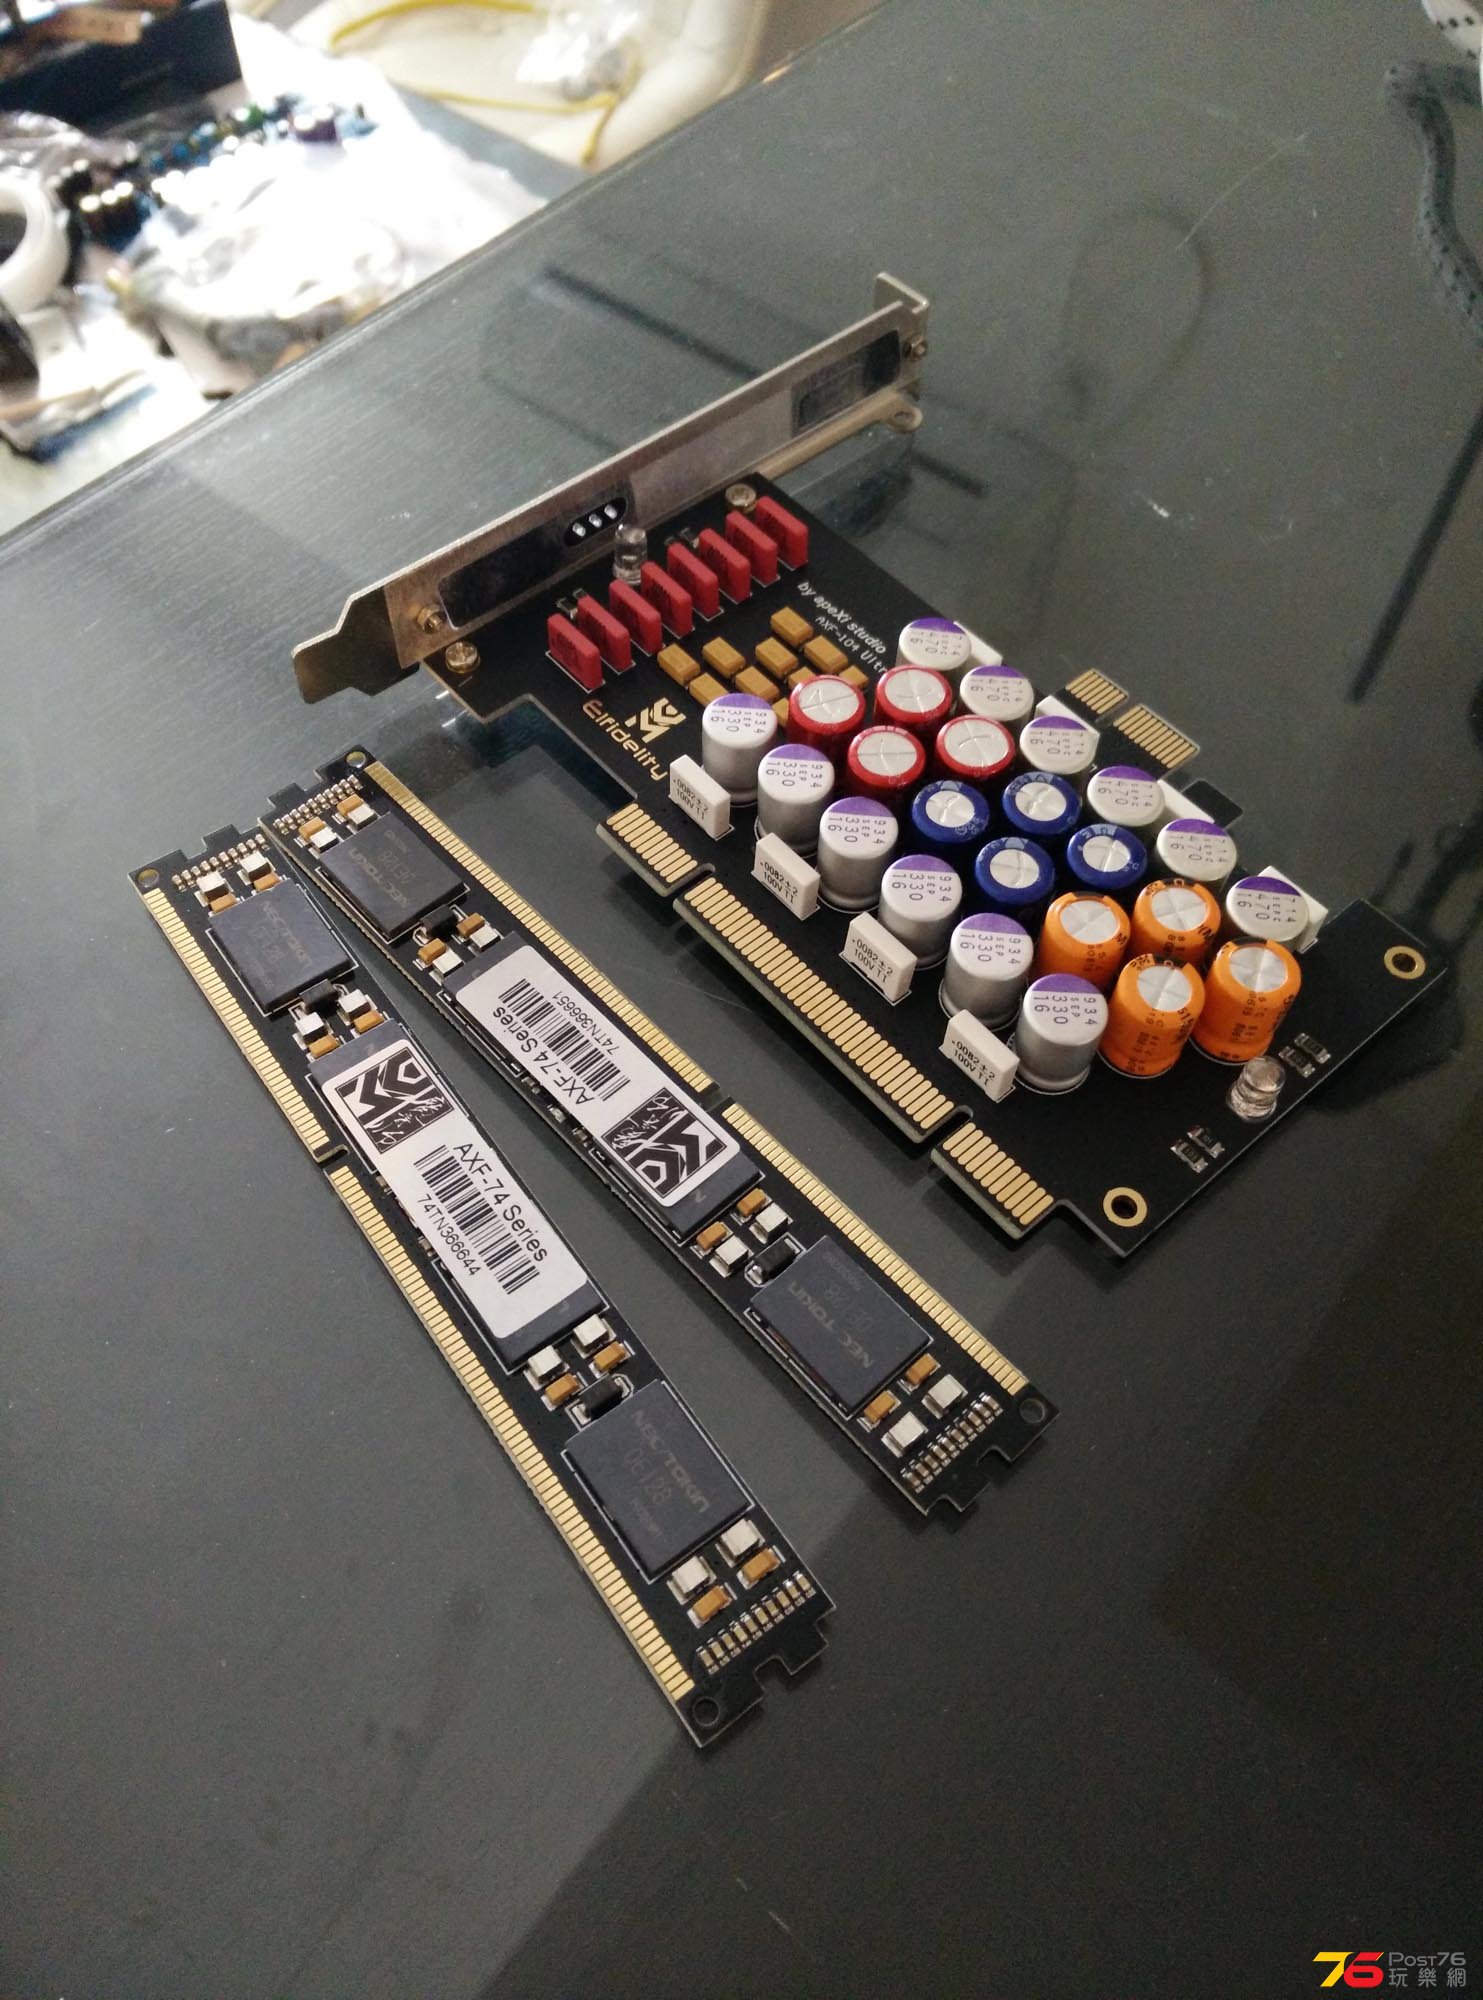 水塘陣 - 分別插系DDR ram 同PCI 槽